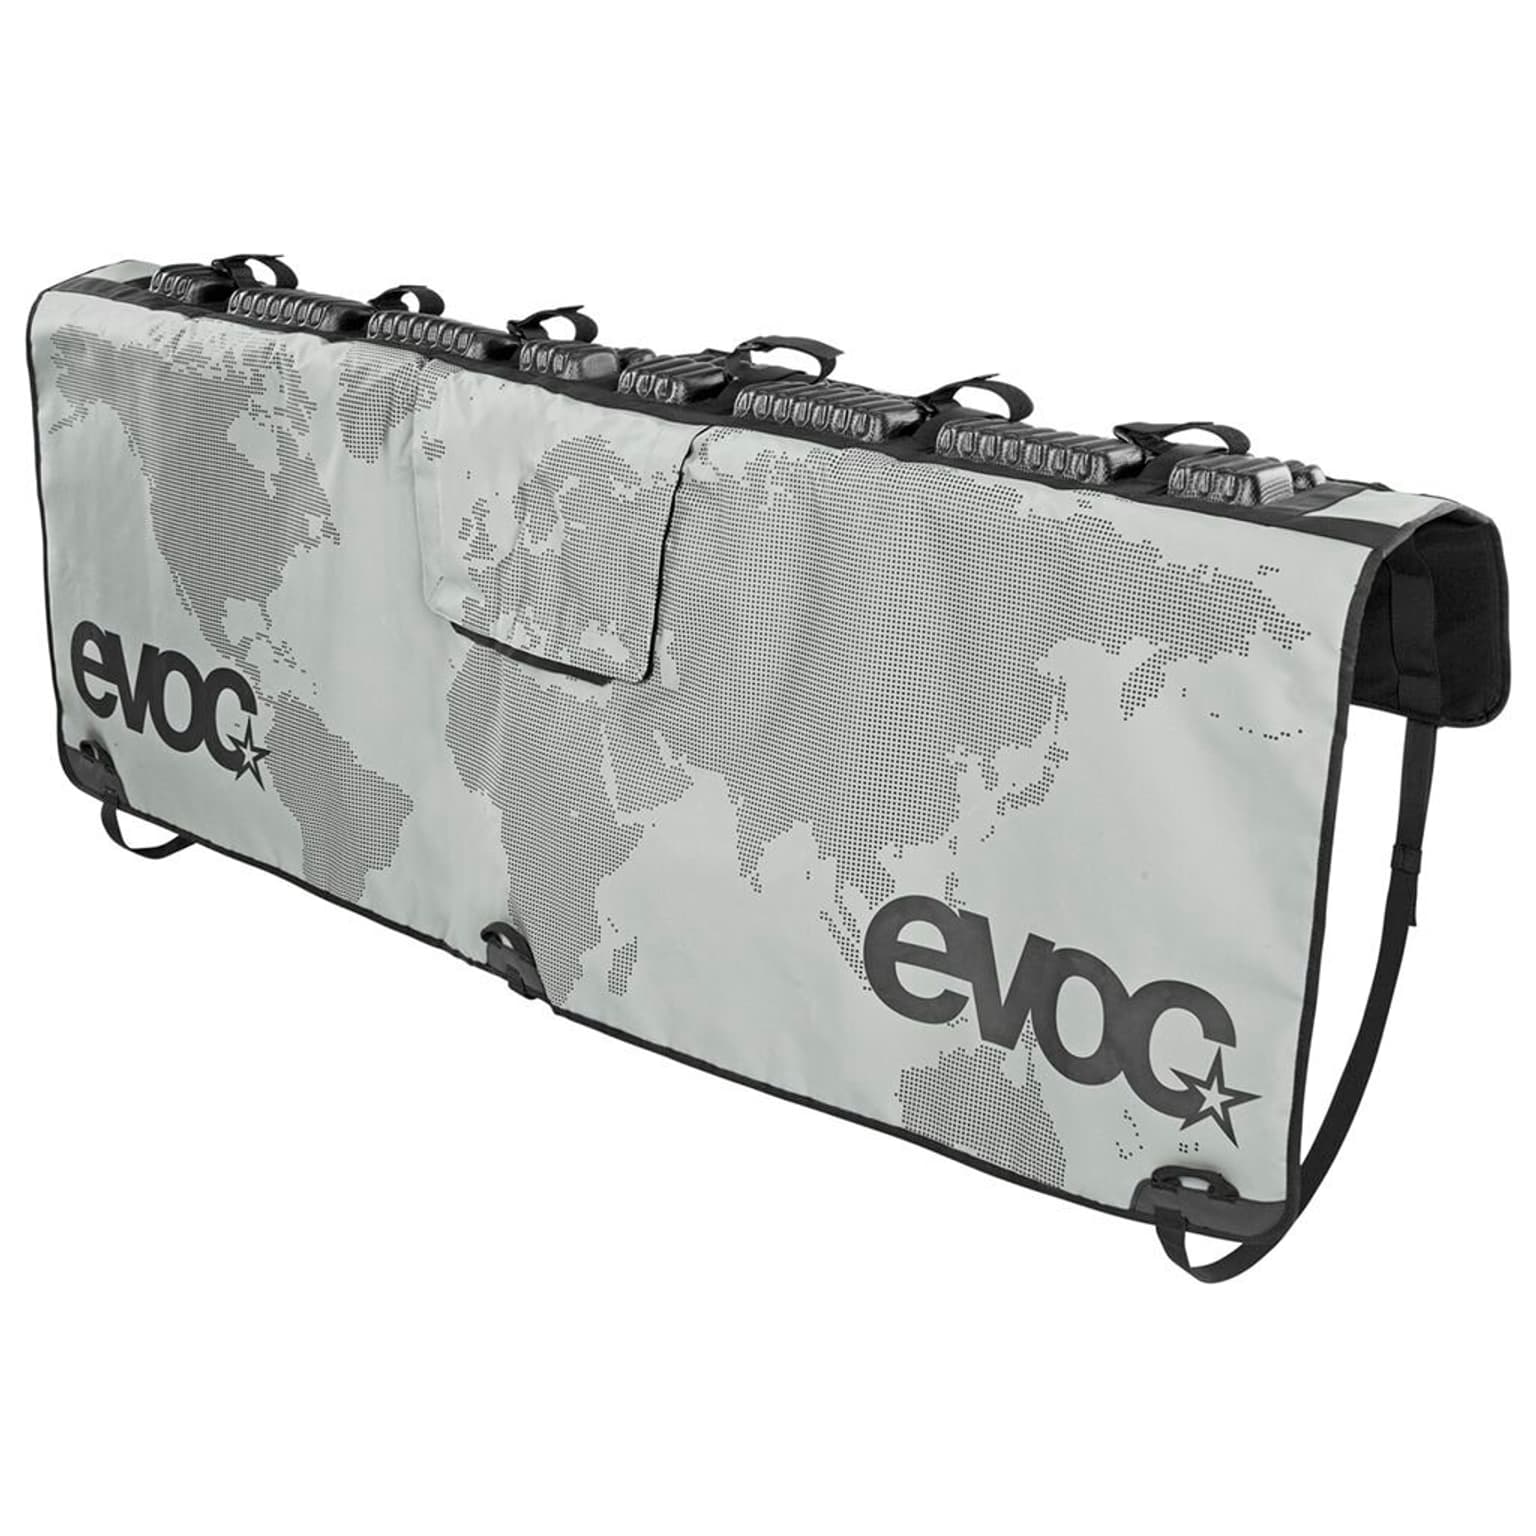 Evoc Evoc Tailgate Pad XL Transporttasche hellgrau 1